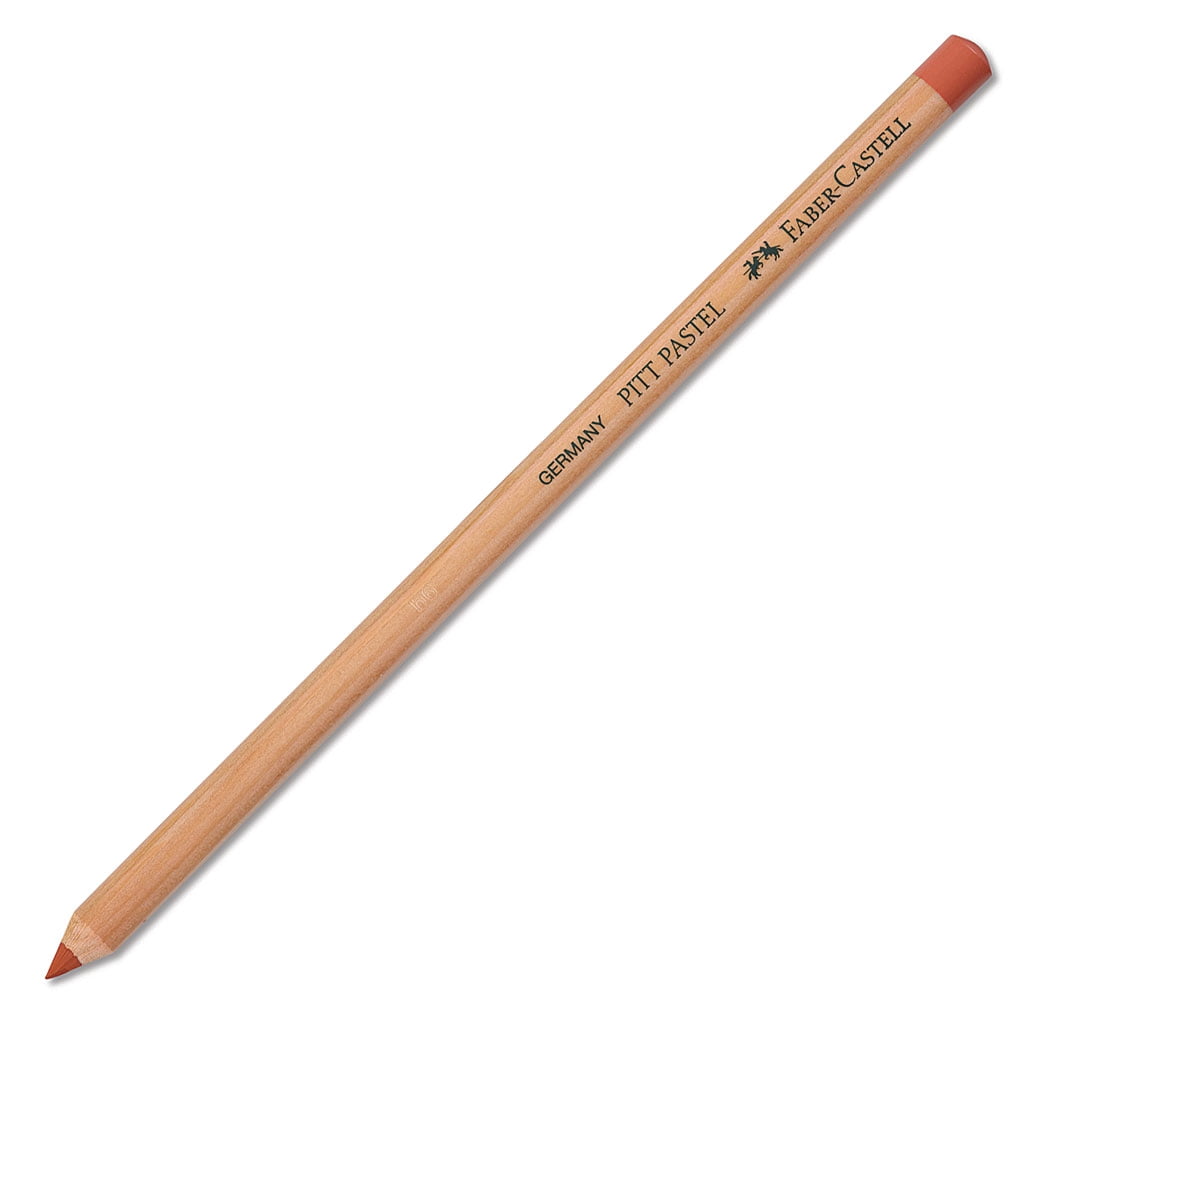 Derwent Blender And Burnisher Pencils In Tub, Colorless, Set Of 72